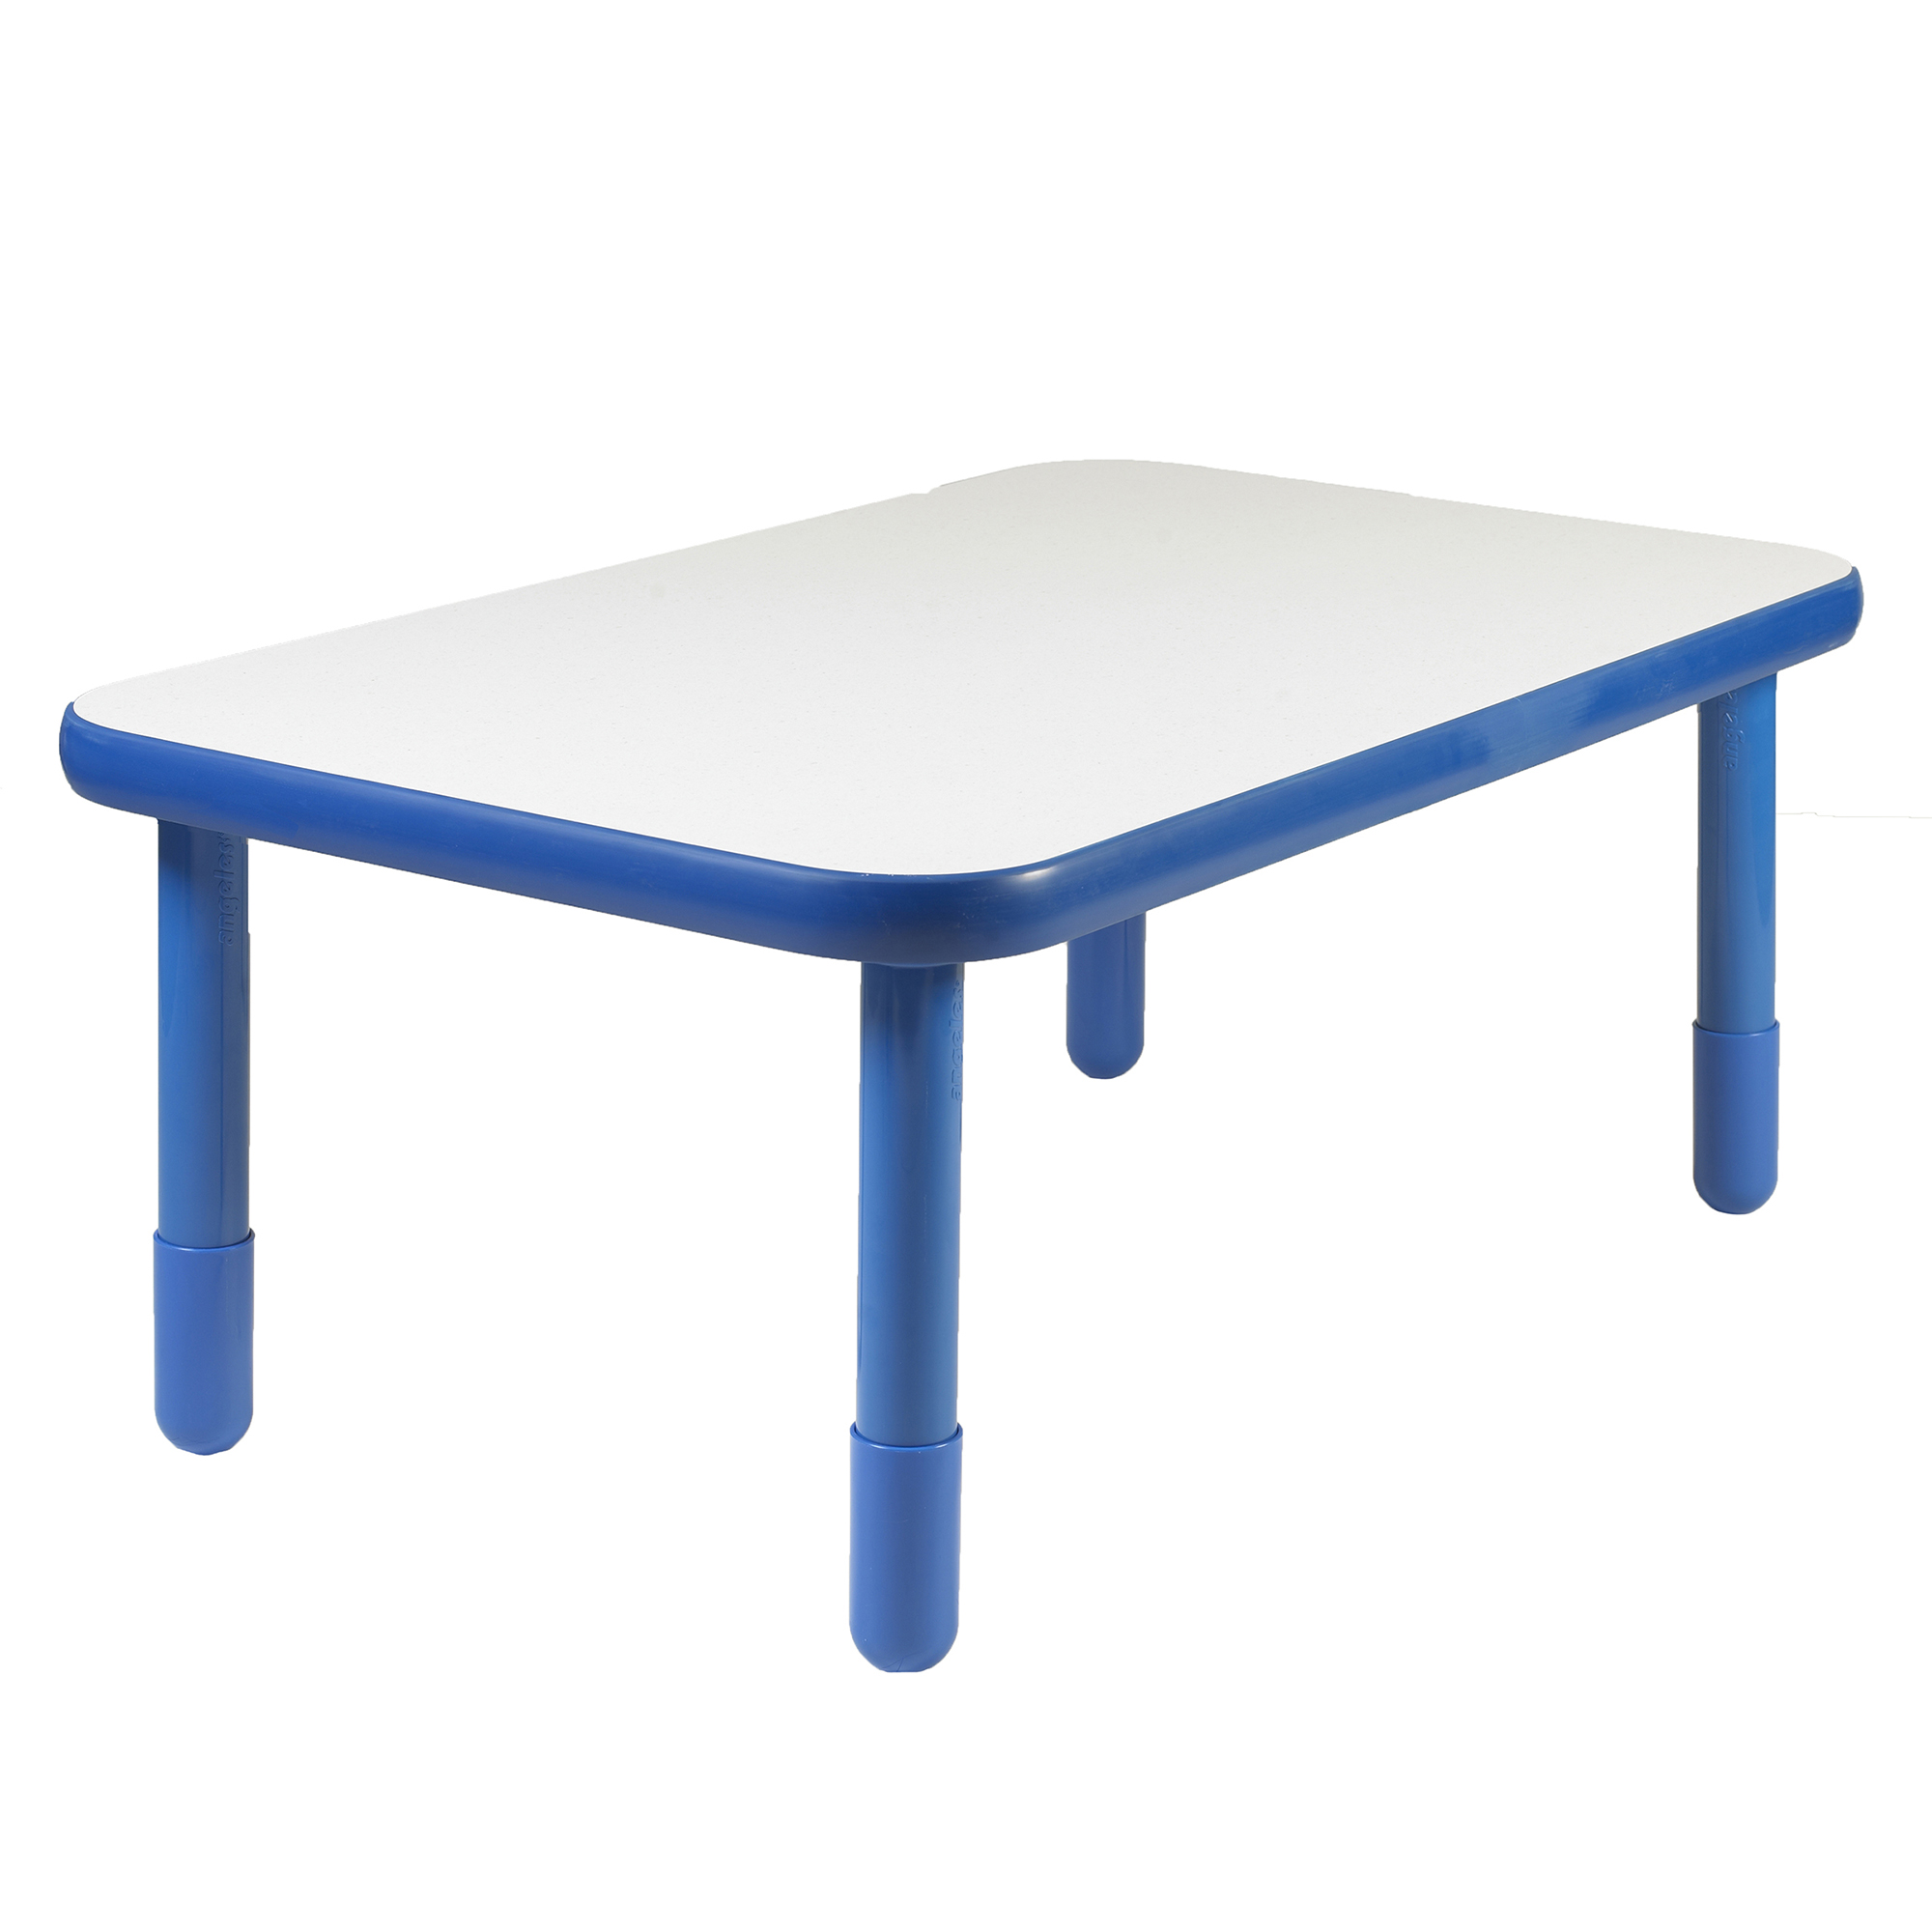 BaseLine® 122 cm  x 76 cm  Rectangular Table - Royal Blue with 51 cm  Legs